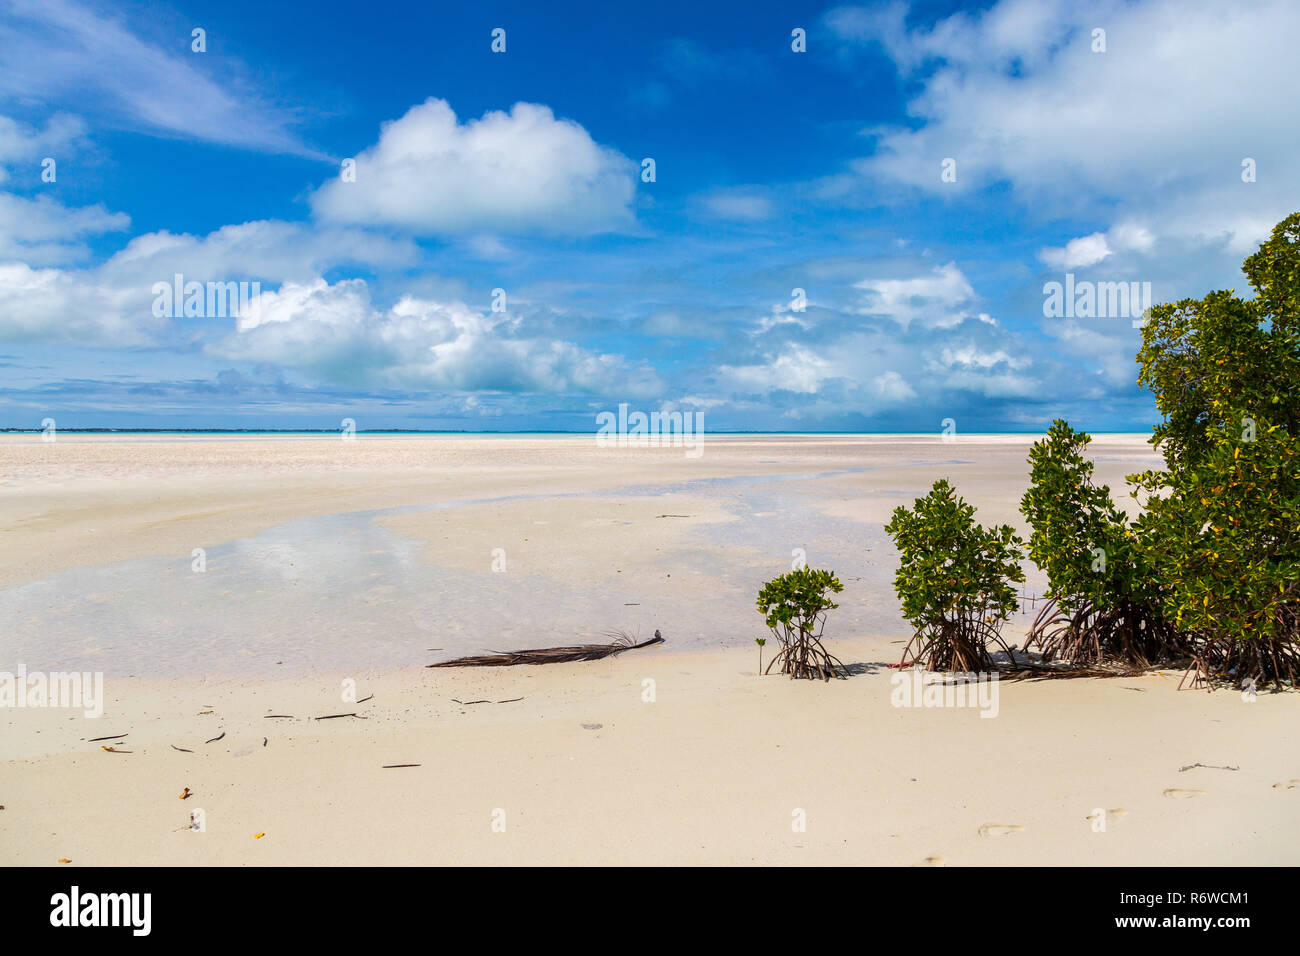 Paradisíaca playa de arena azul azul turquesa laguna poco profunda, al norte el atolón de Tarawa, Kiribati, Islas Gilbert, Micronesia, Oceanía. Palmeras, manglares Foto de stock